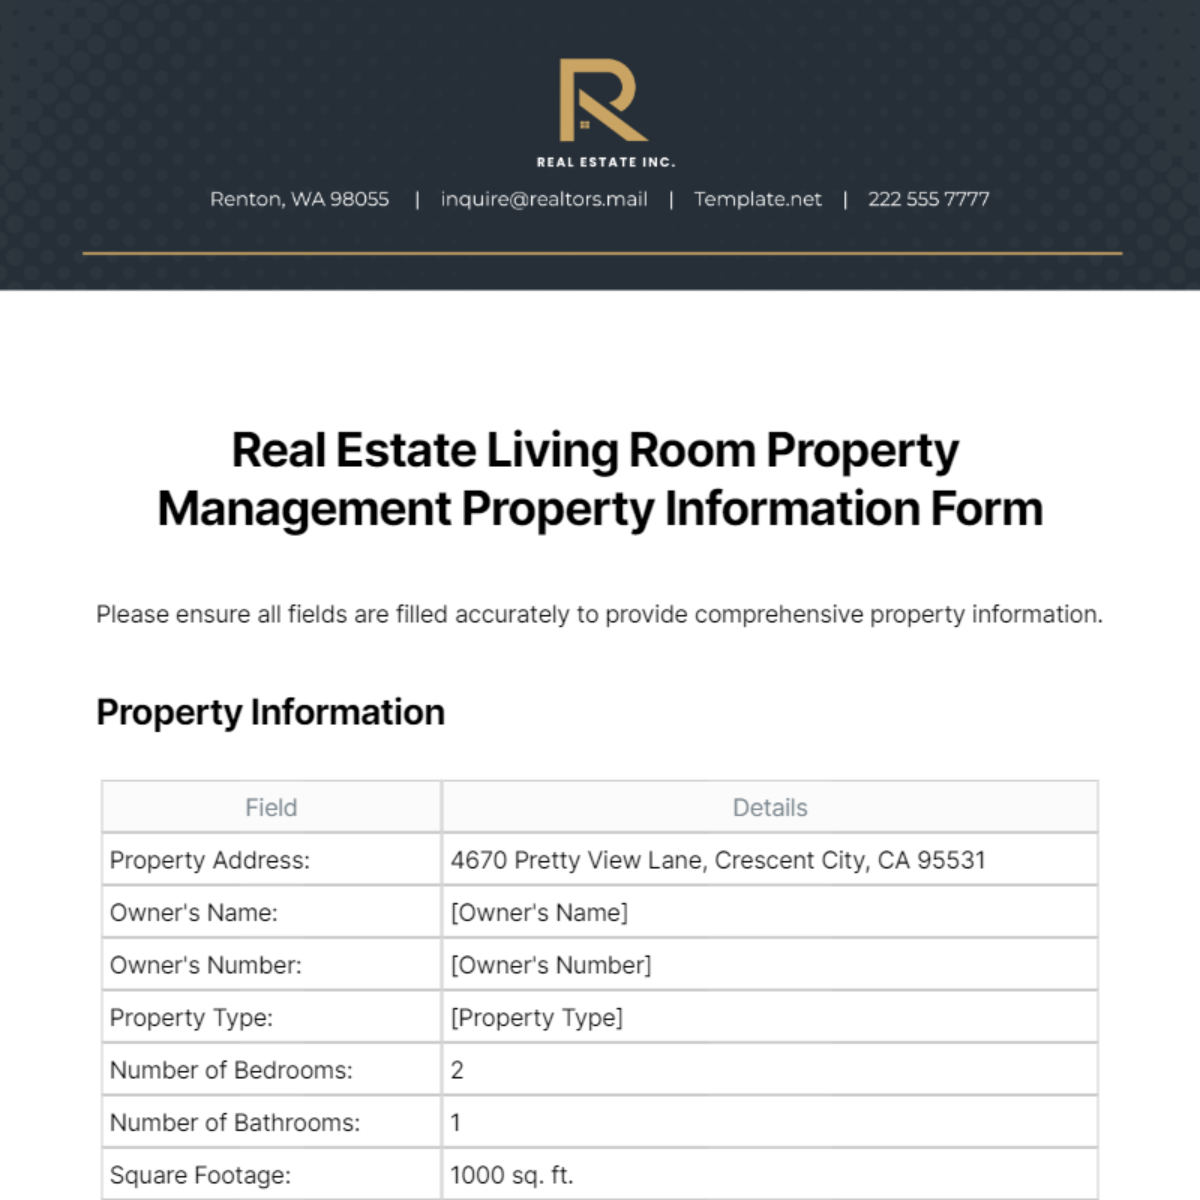 Real Estate Living Room Property Management Property Information Form Template